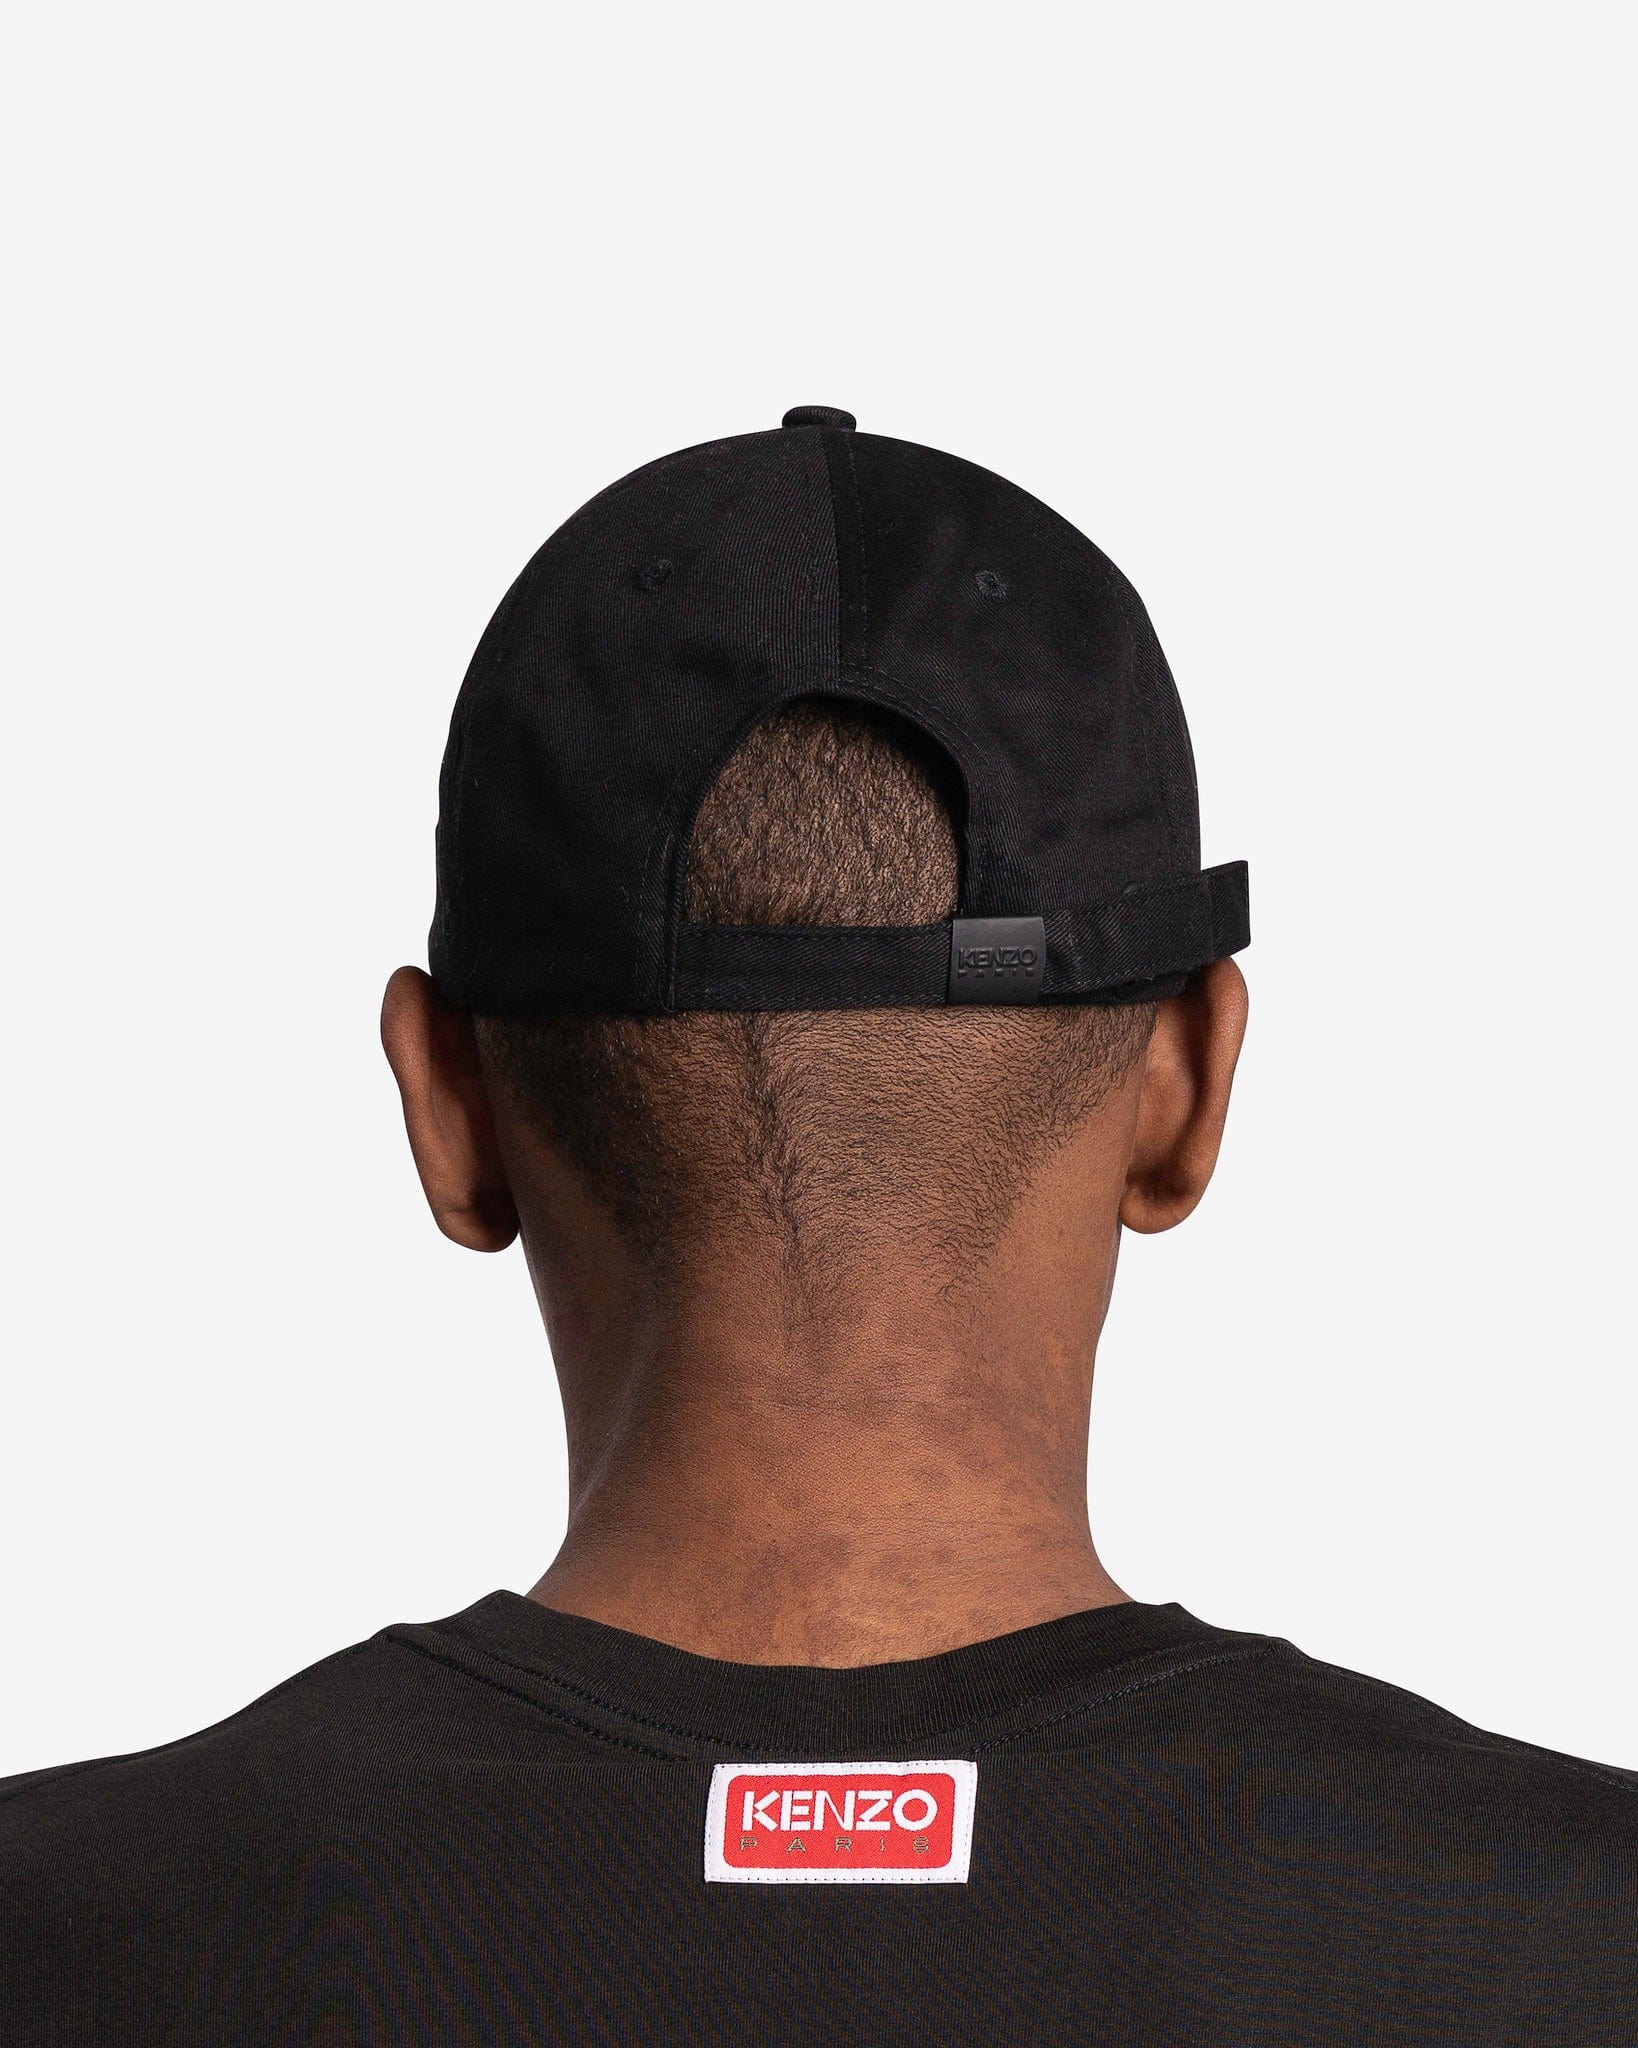 KENZO Men's Hats Logo Cap in Black/Red